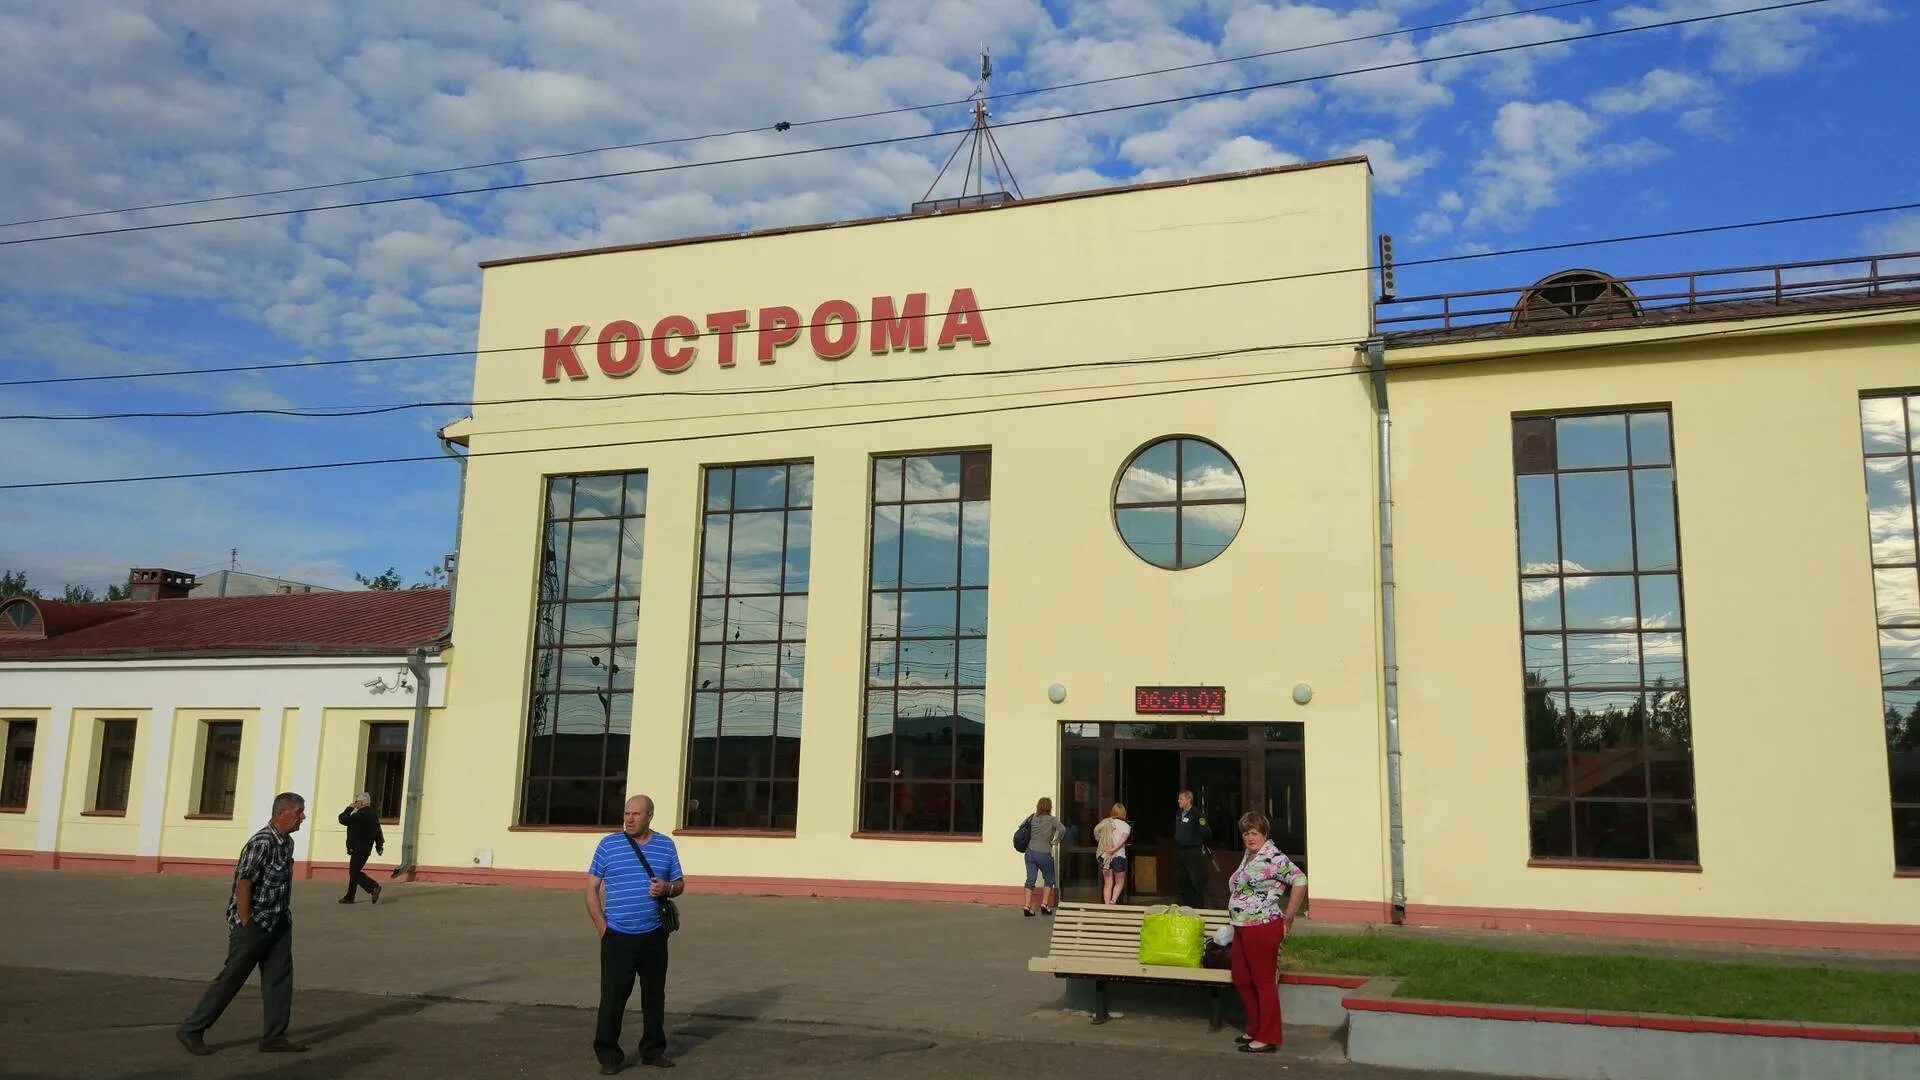 Кострома новая телефон. Вокзал в Костроме Кострома новая. ЖД вокзал Кострома. Старый ж д вокзал в Костроме. Новый ж д вокзал в Костроме.